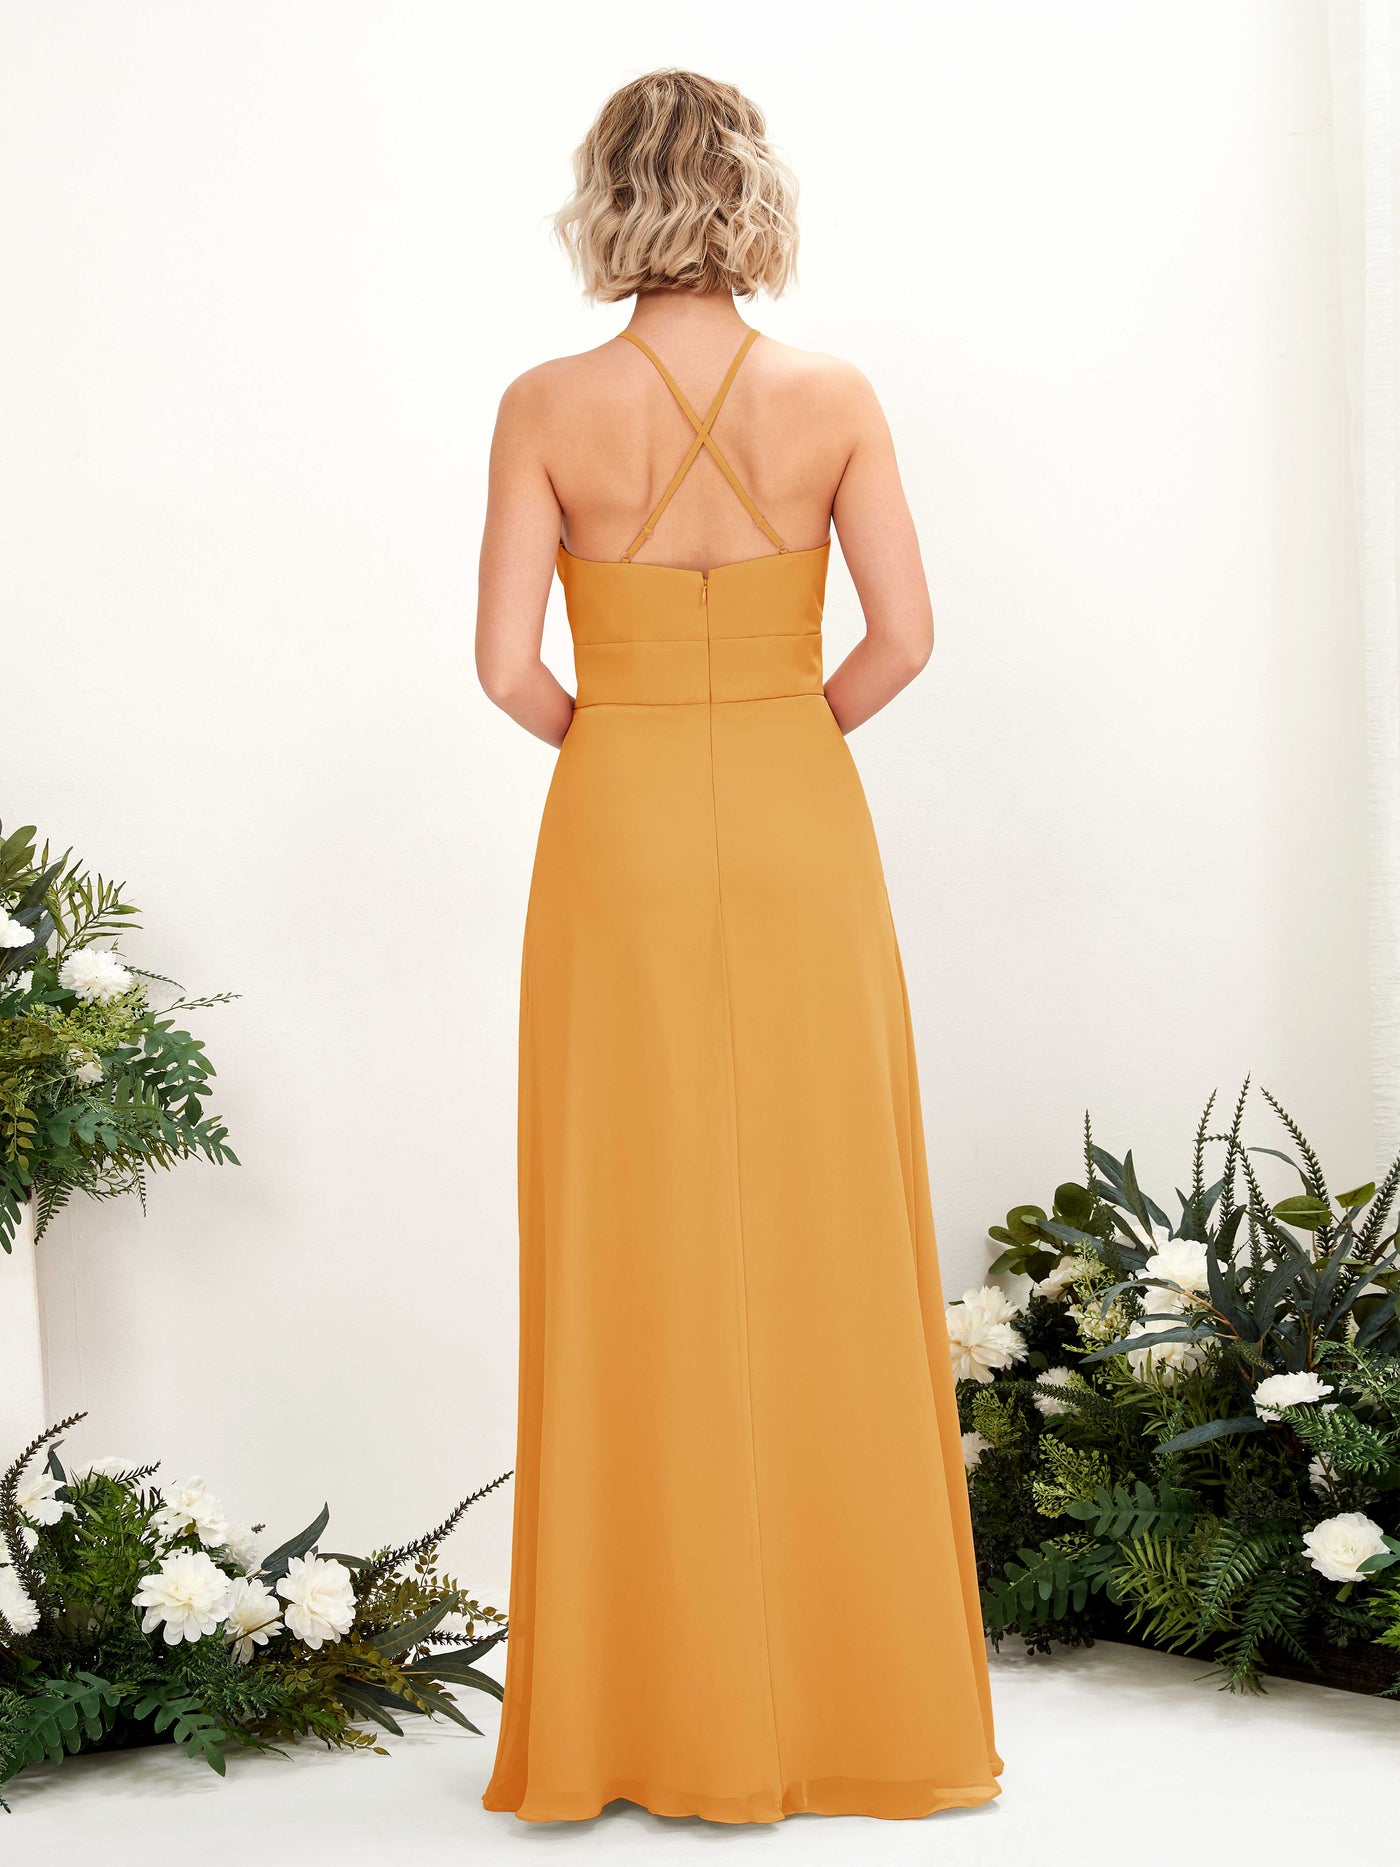 Mango Bridesmaid Dresses Bridesmaid Dress A-line Chiffon Halter Full Length Sleeveless Wedding Party Dress (81225202)#color_mango